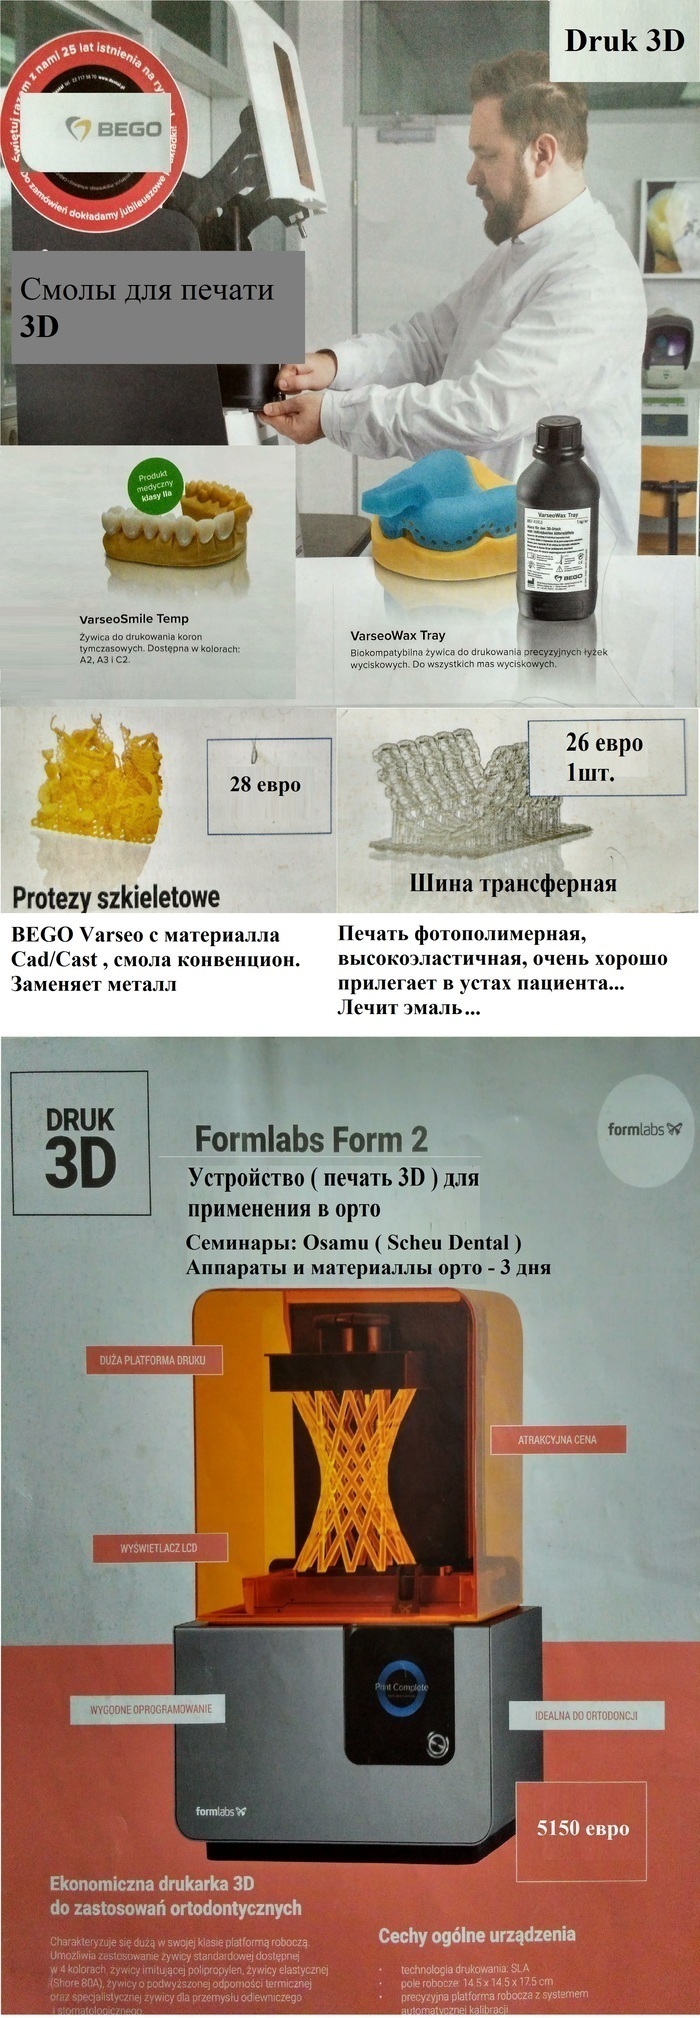 Praxis Ortho CE. Аппараты для печати 3D. Шины для выбелевания PHILIPS, Keystone Zooble.com.ua